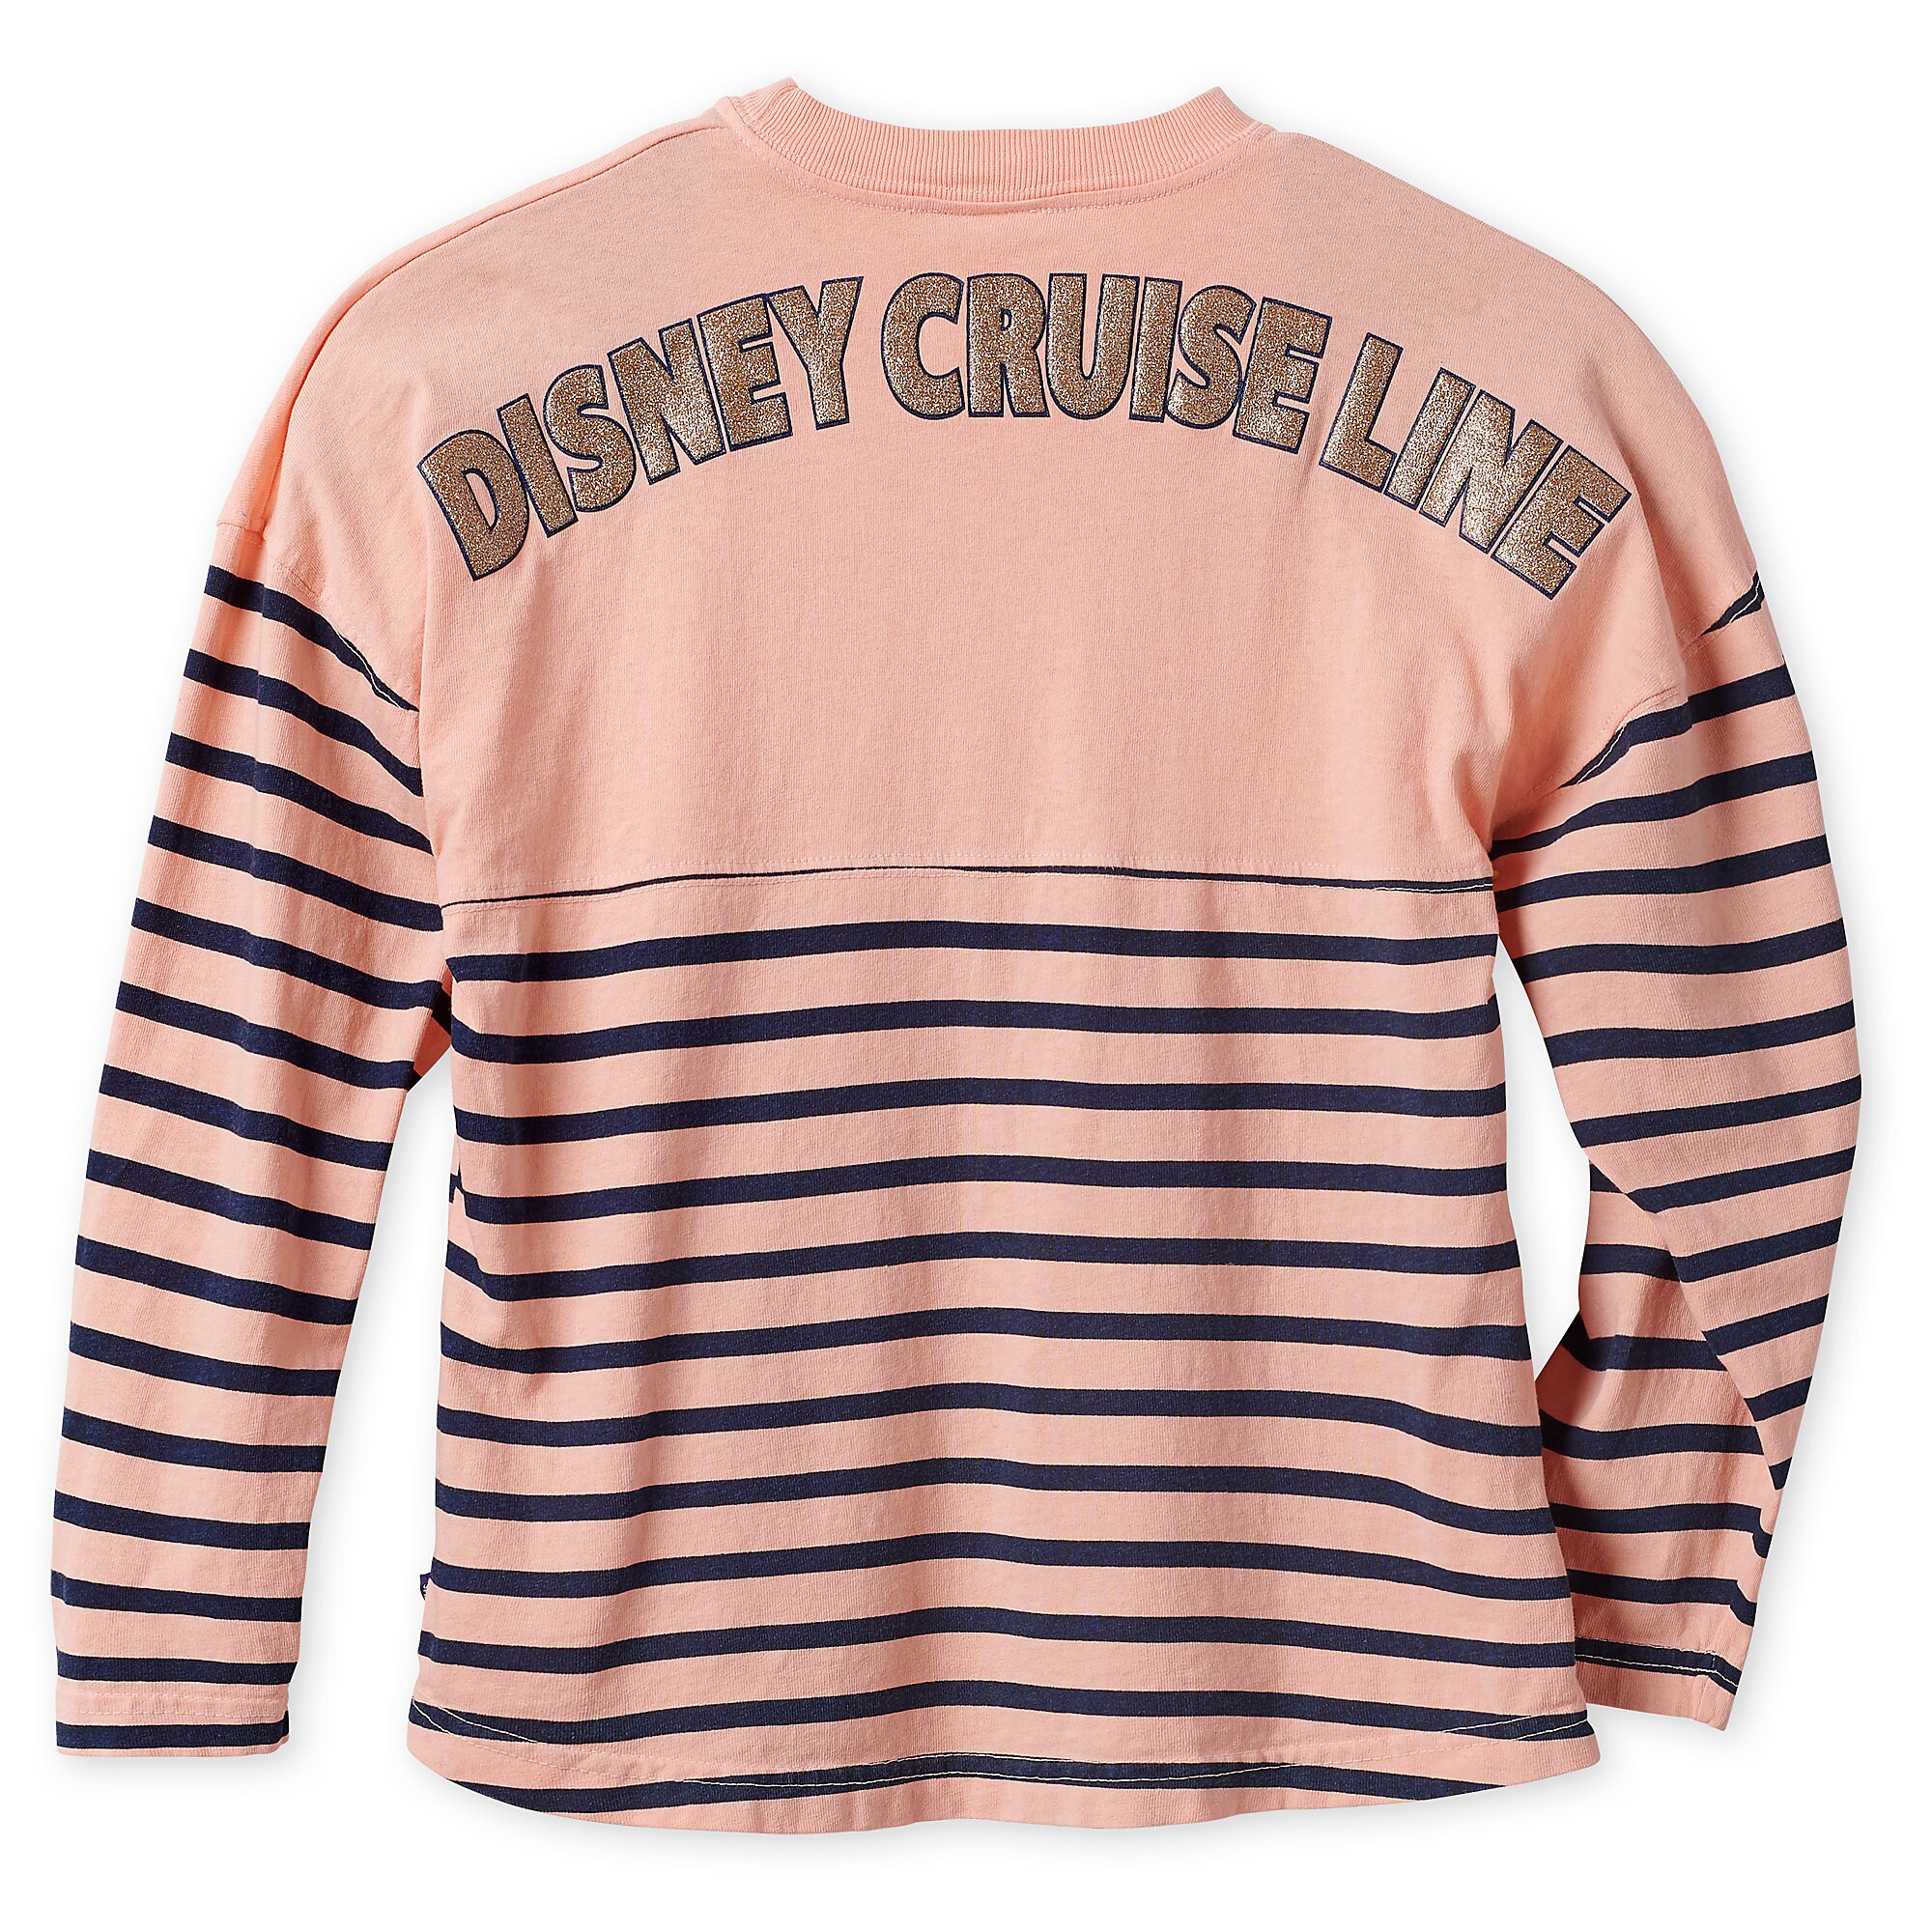 Disney Cruise Line Spirit Jersey for Kids - Striped